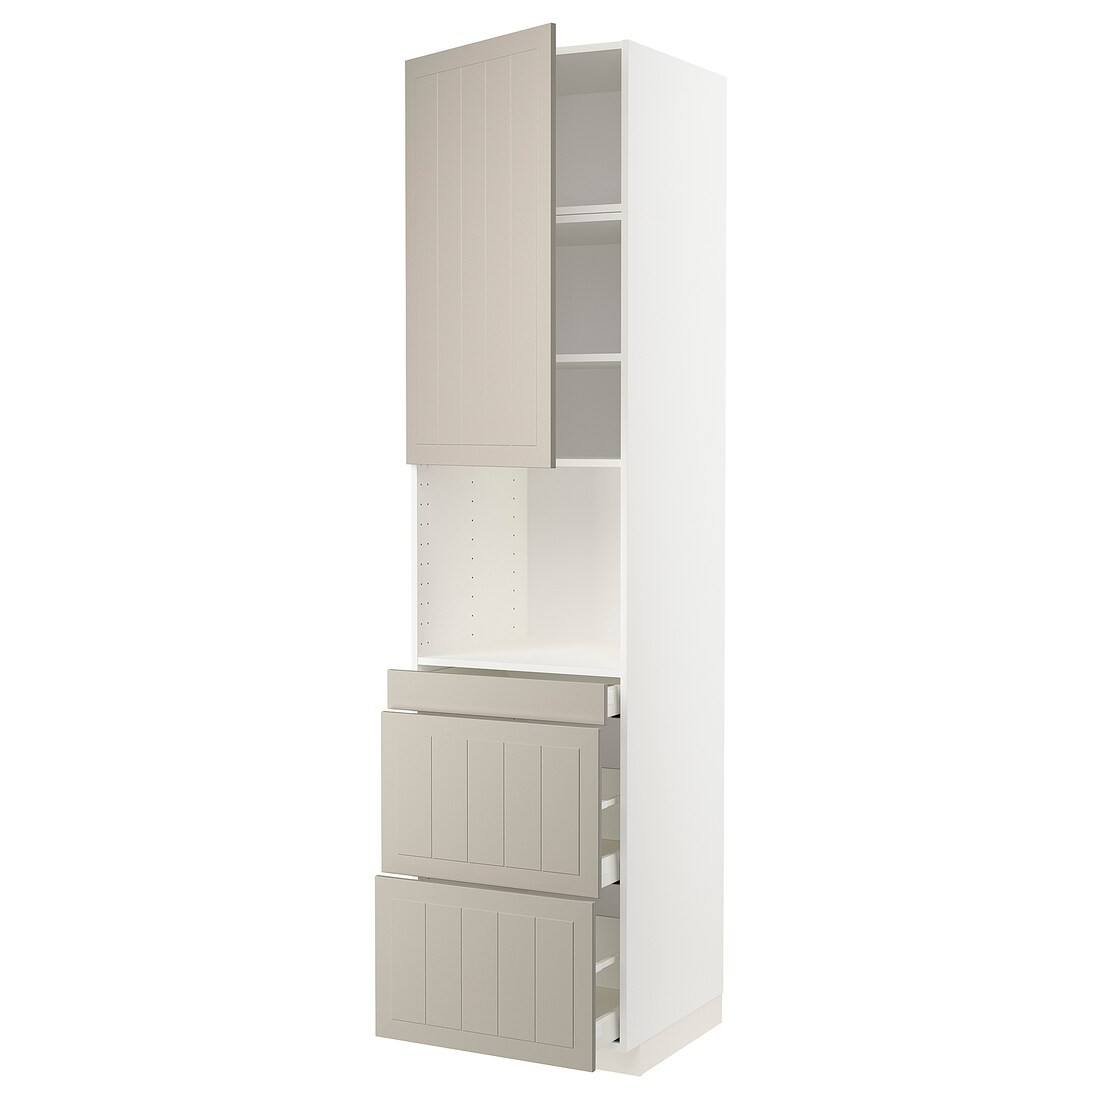 IKEA METOD МЕТОД / MAXIMERA МАКСИМЕРА Высокий шкаф для СВЧ / дверца / 3 ящика, белый / Stensund бежевый, 60x60x240 см 59456795 | 594.567.95